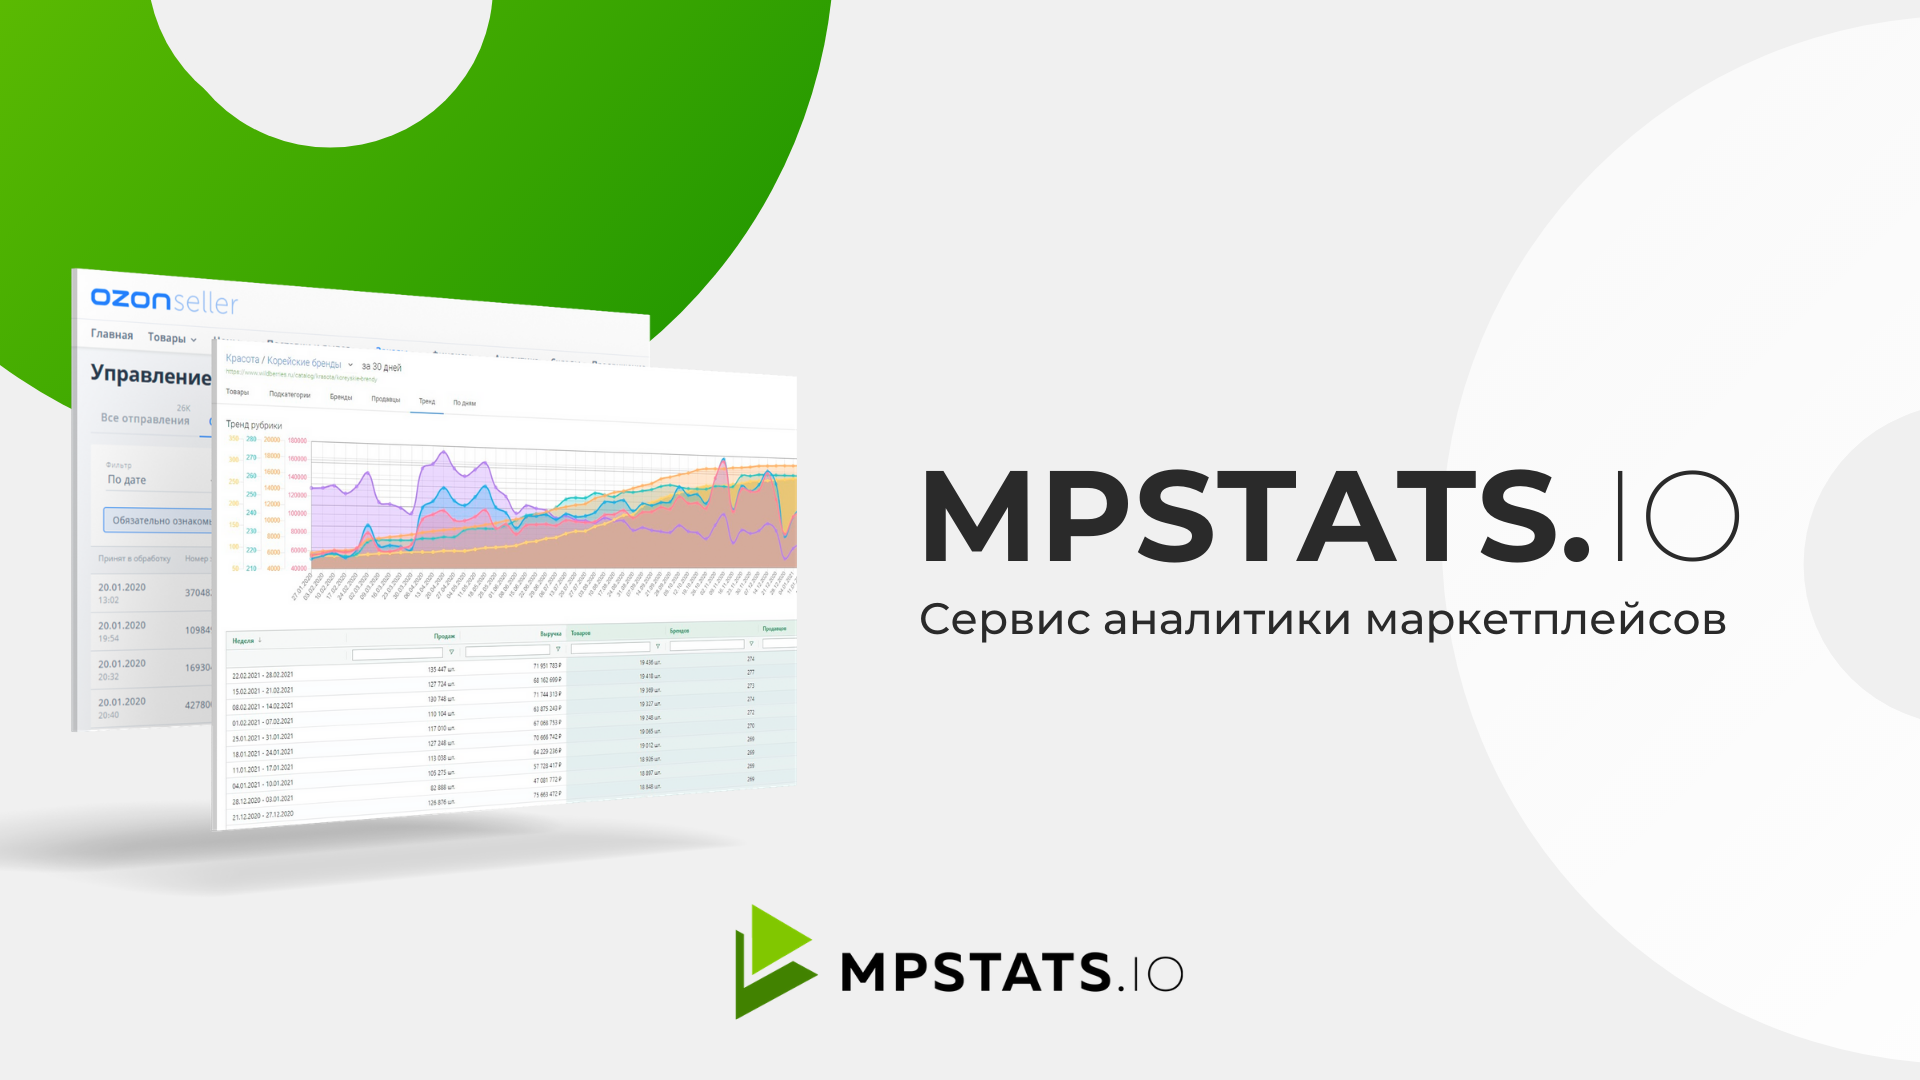 Mpstats - сервис аналитики маркетплейсов. Аналитика MP stats. Сервисы аналитики. Mpstats логотип. Возможности маркетплейсов